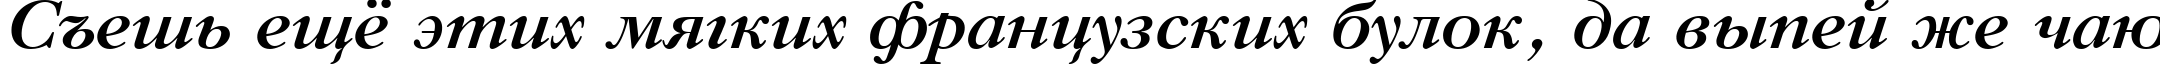 Пример написания шрифтом Gazeta Titul Bold Italic:001.001 текста на русском